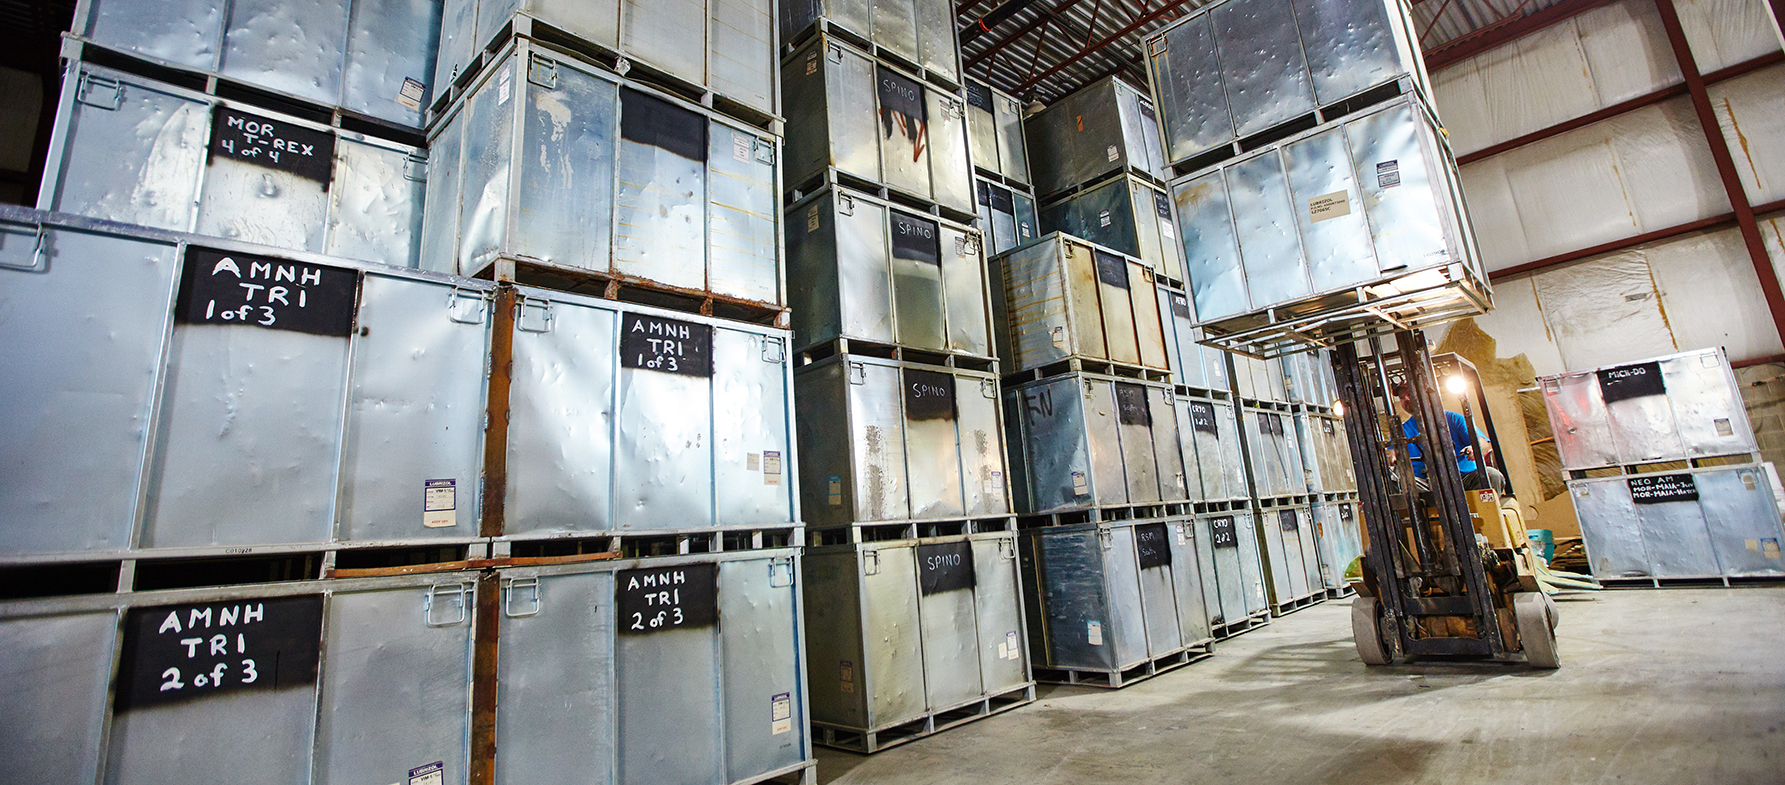 RCI stores hundreds of specimen molds